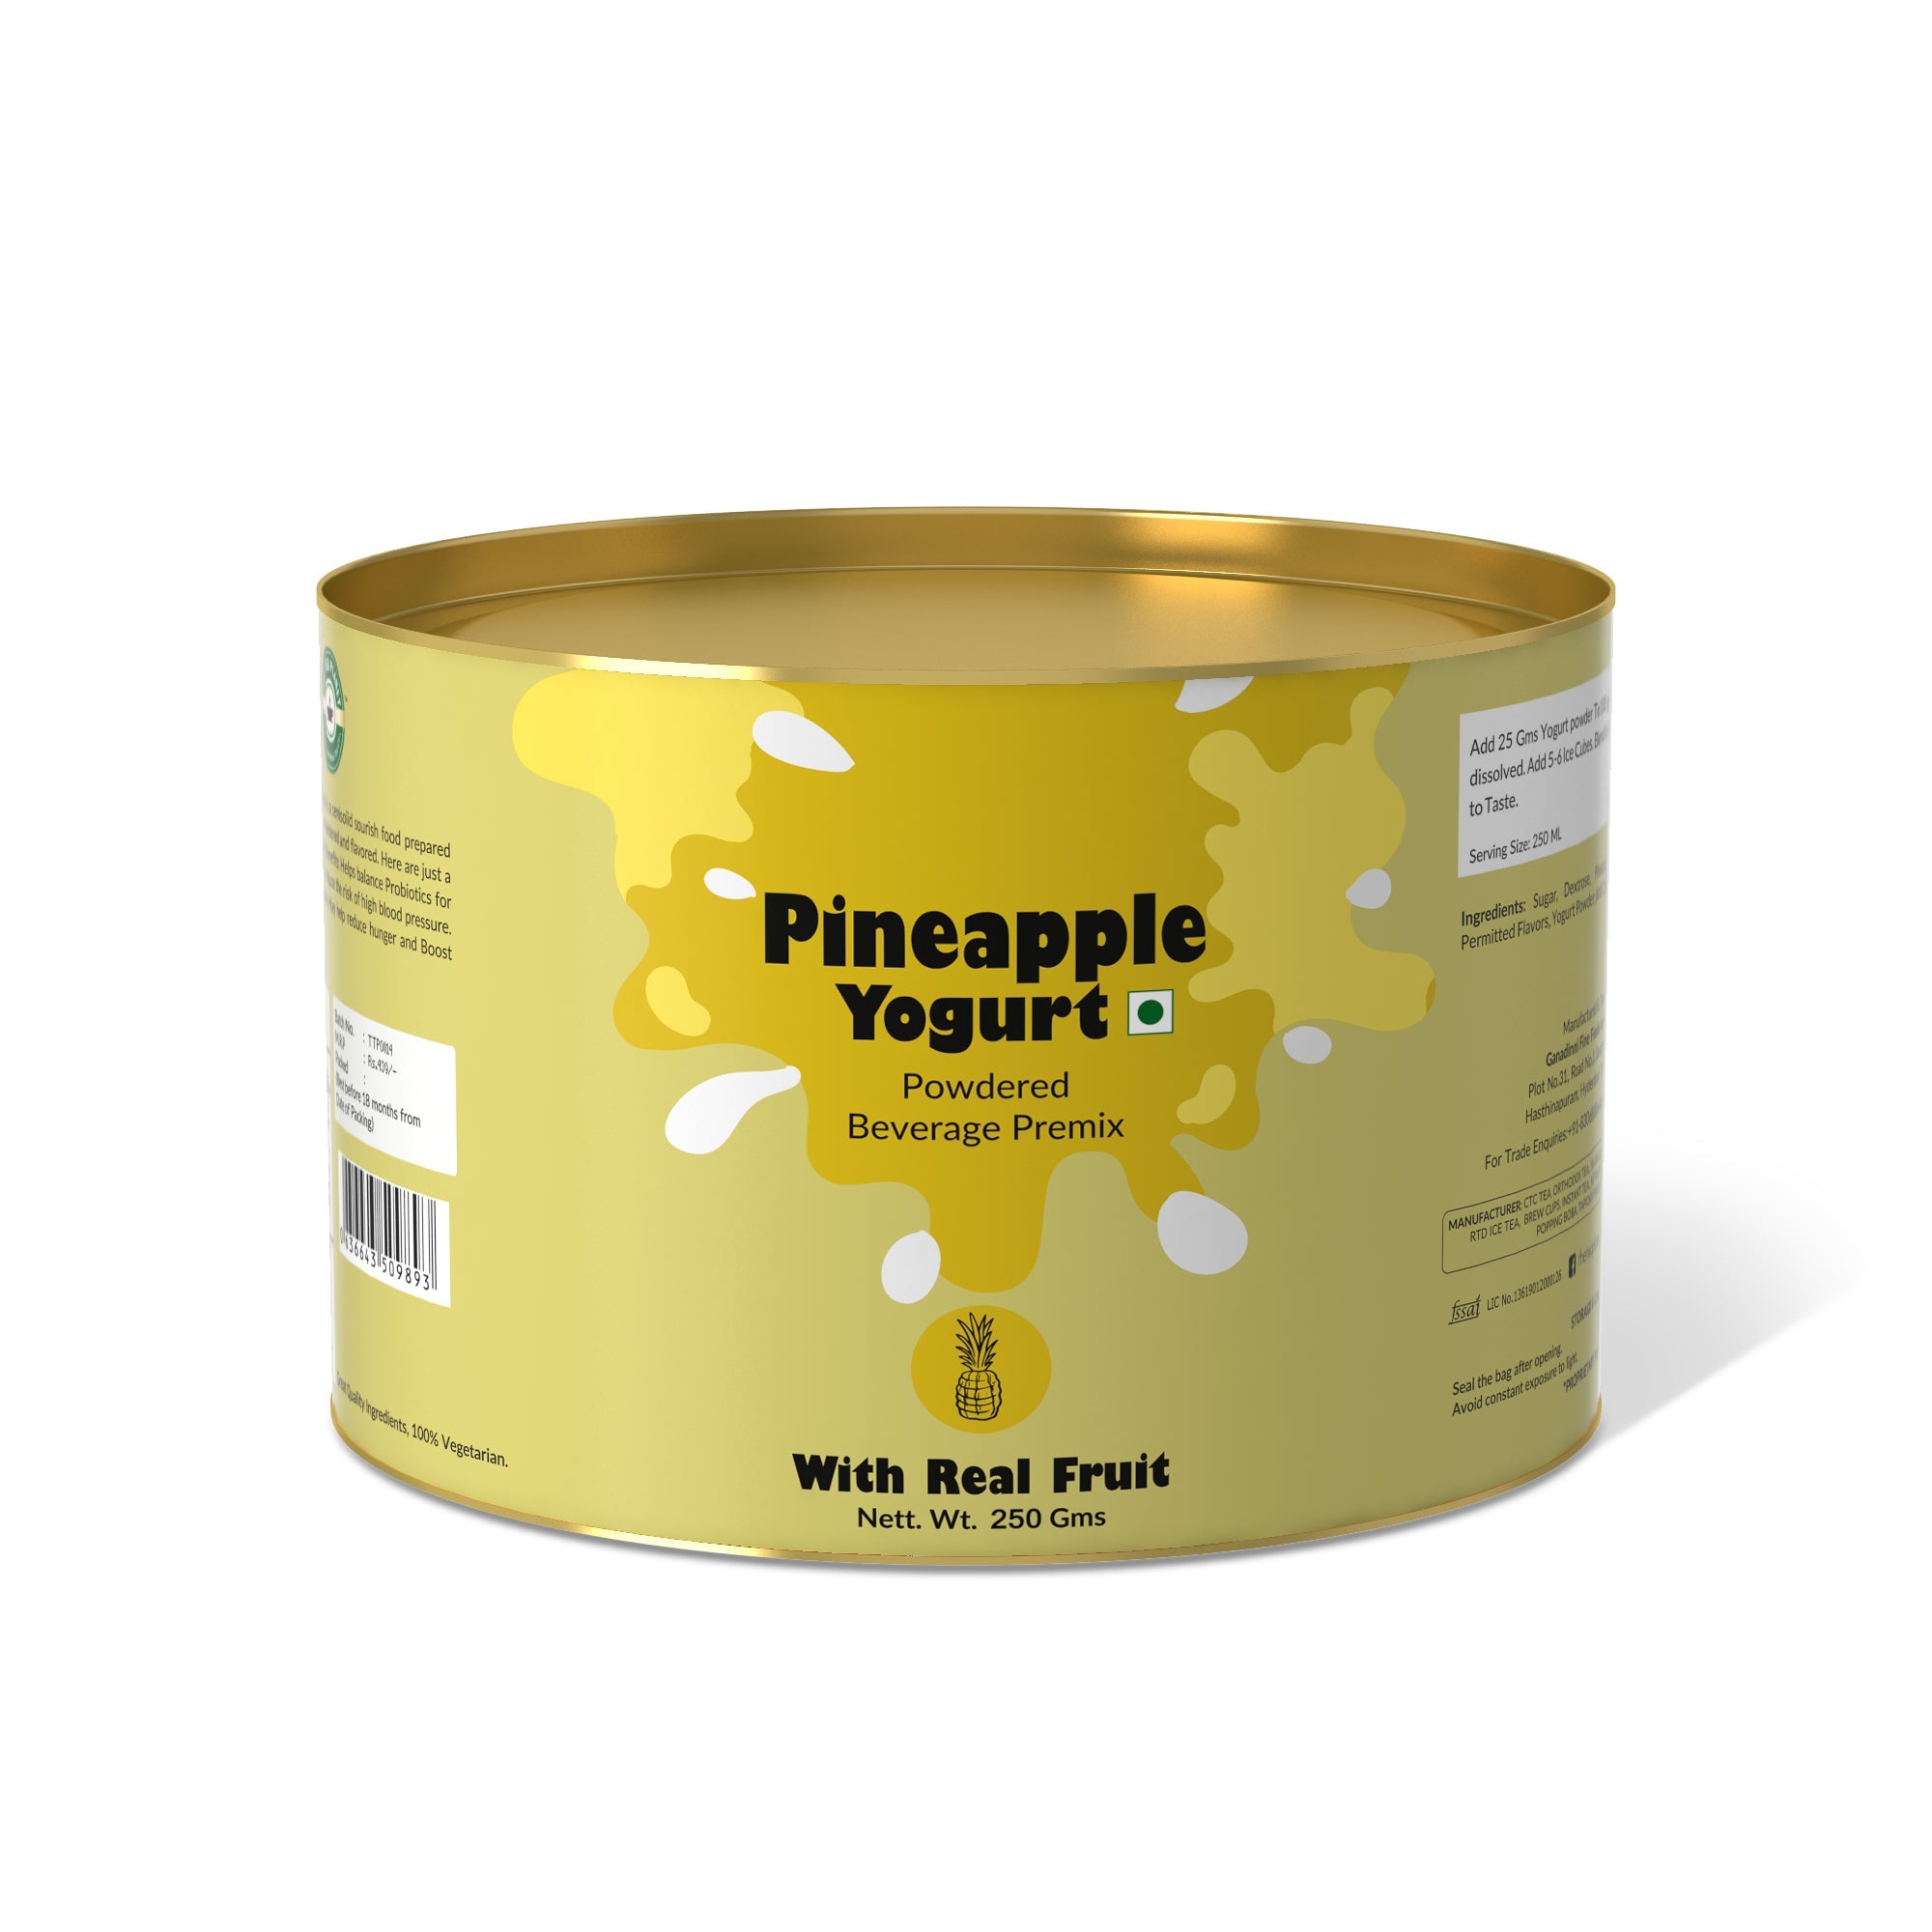 Pineapple Yogurt Mix - 250 gms